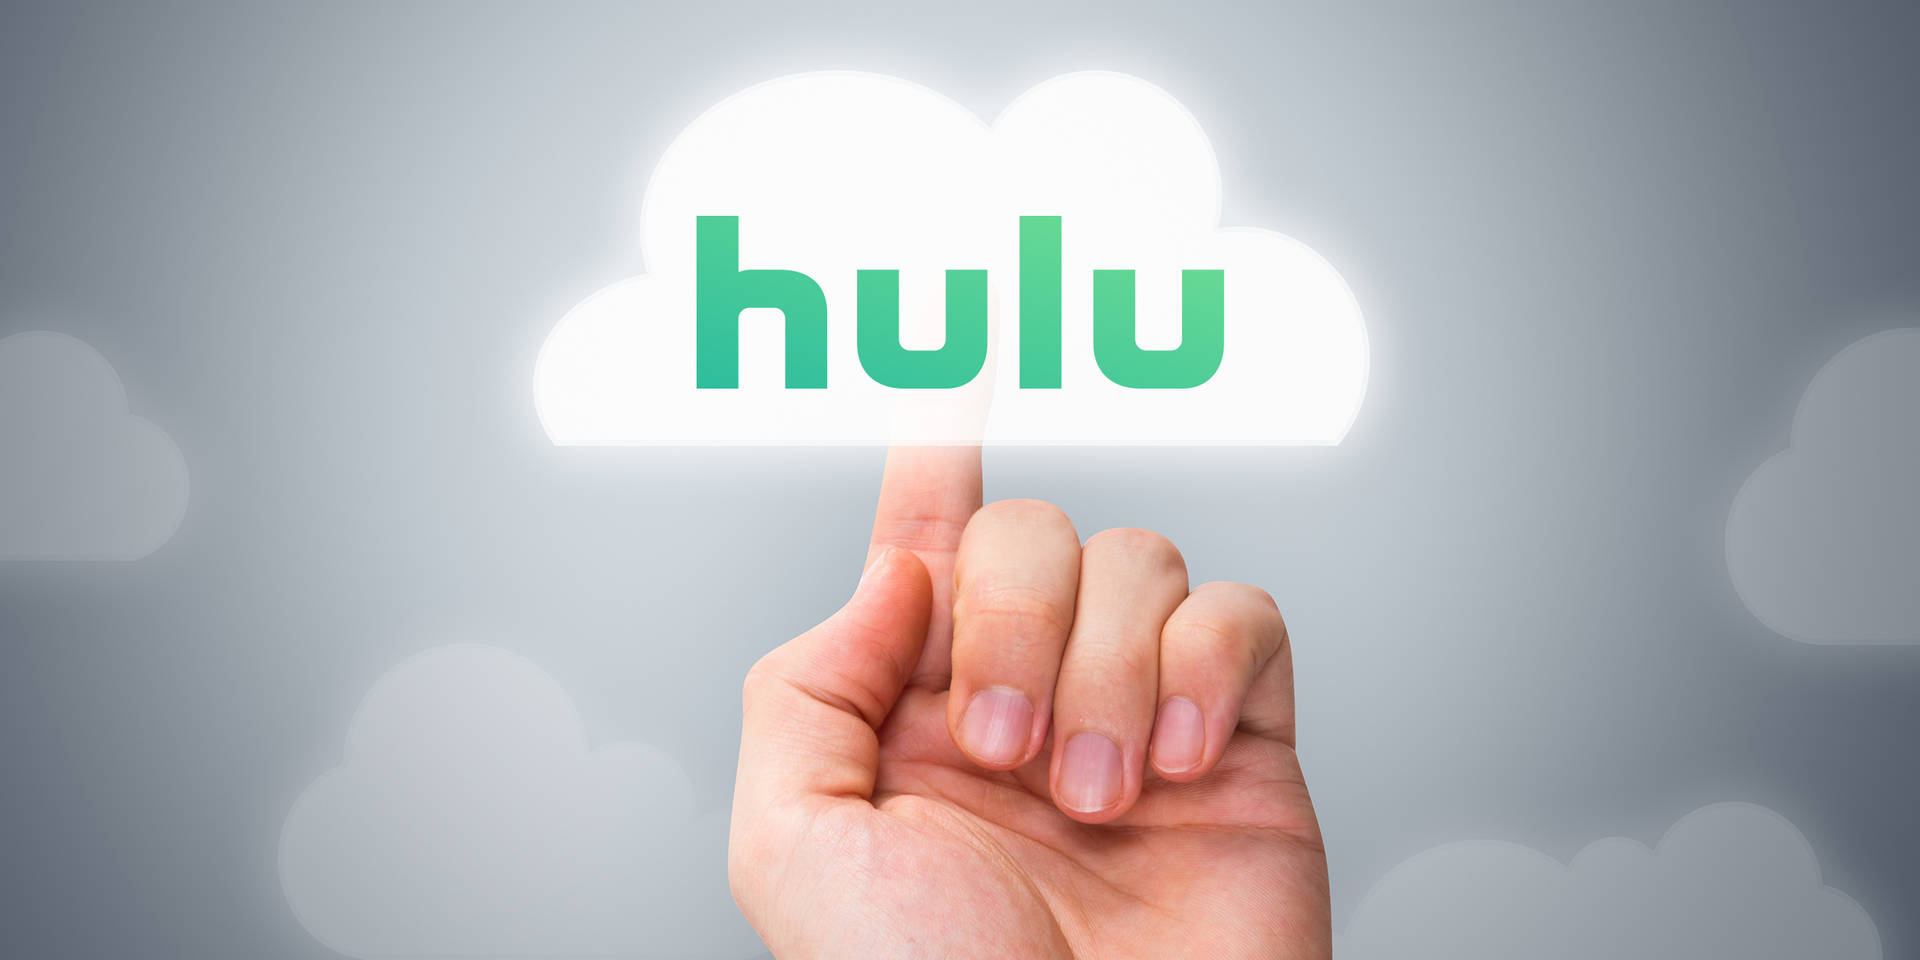 Hulu Cloud Backup Background